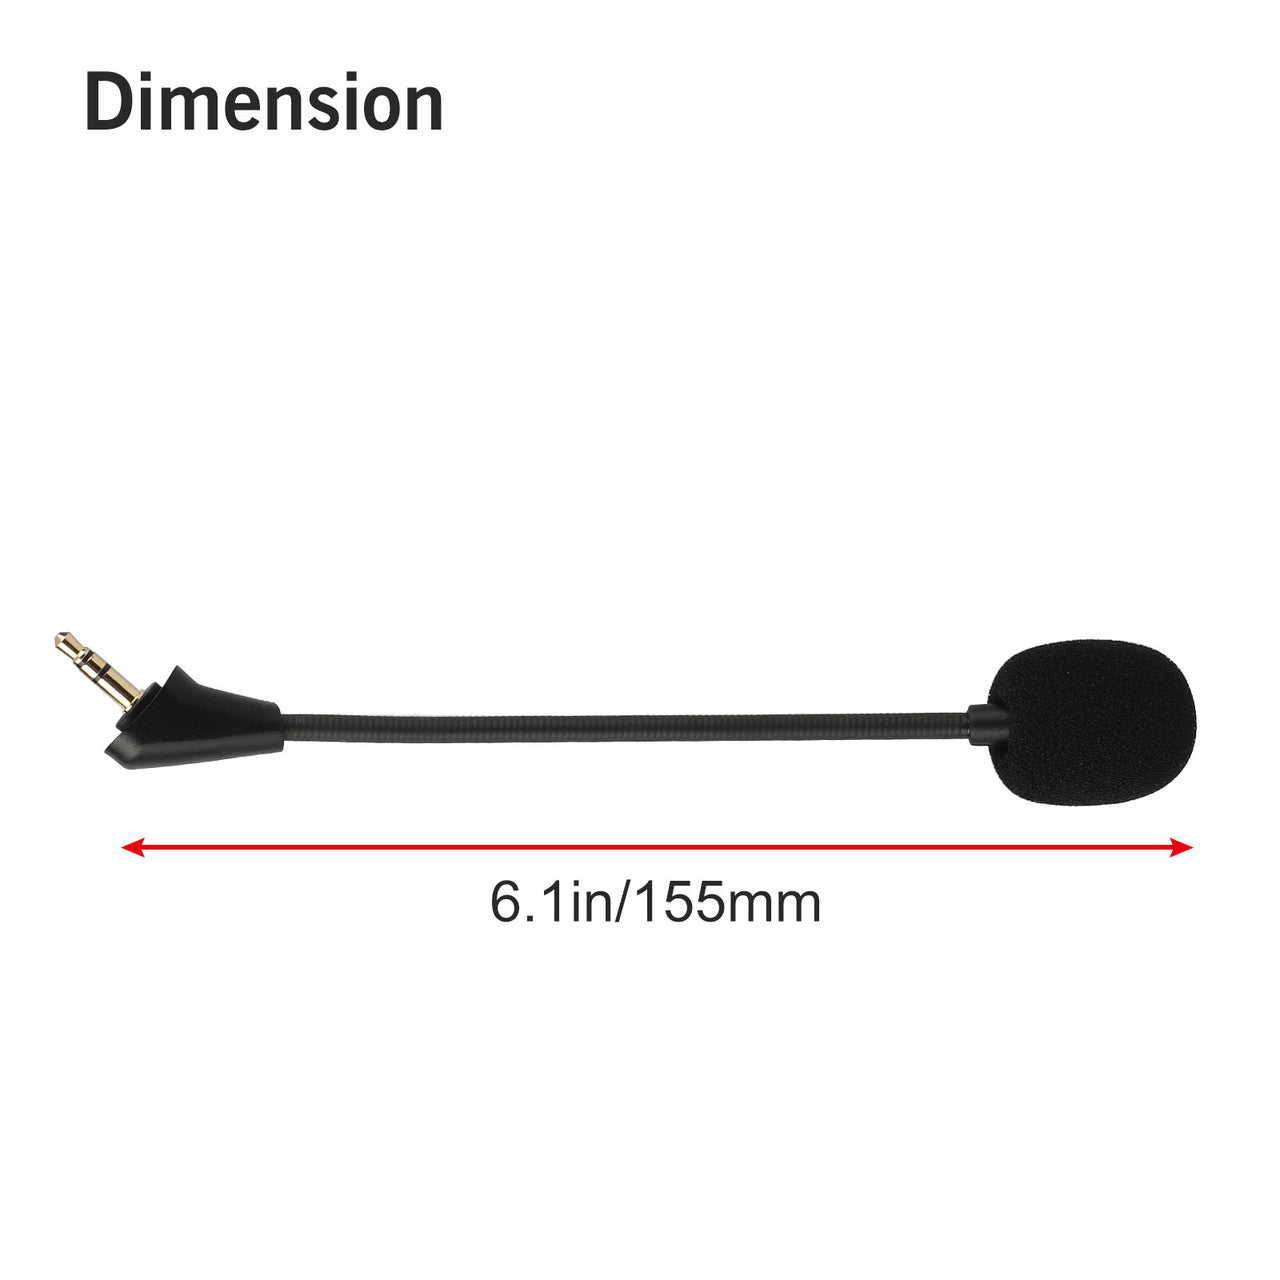 3.5mm Detachable Computer Noise Cancelling Microphone Boom for HyperX Cloud Alpha PC Headset, Black